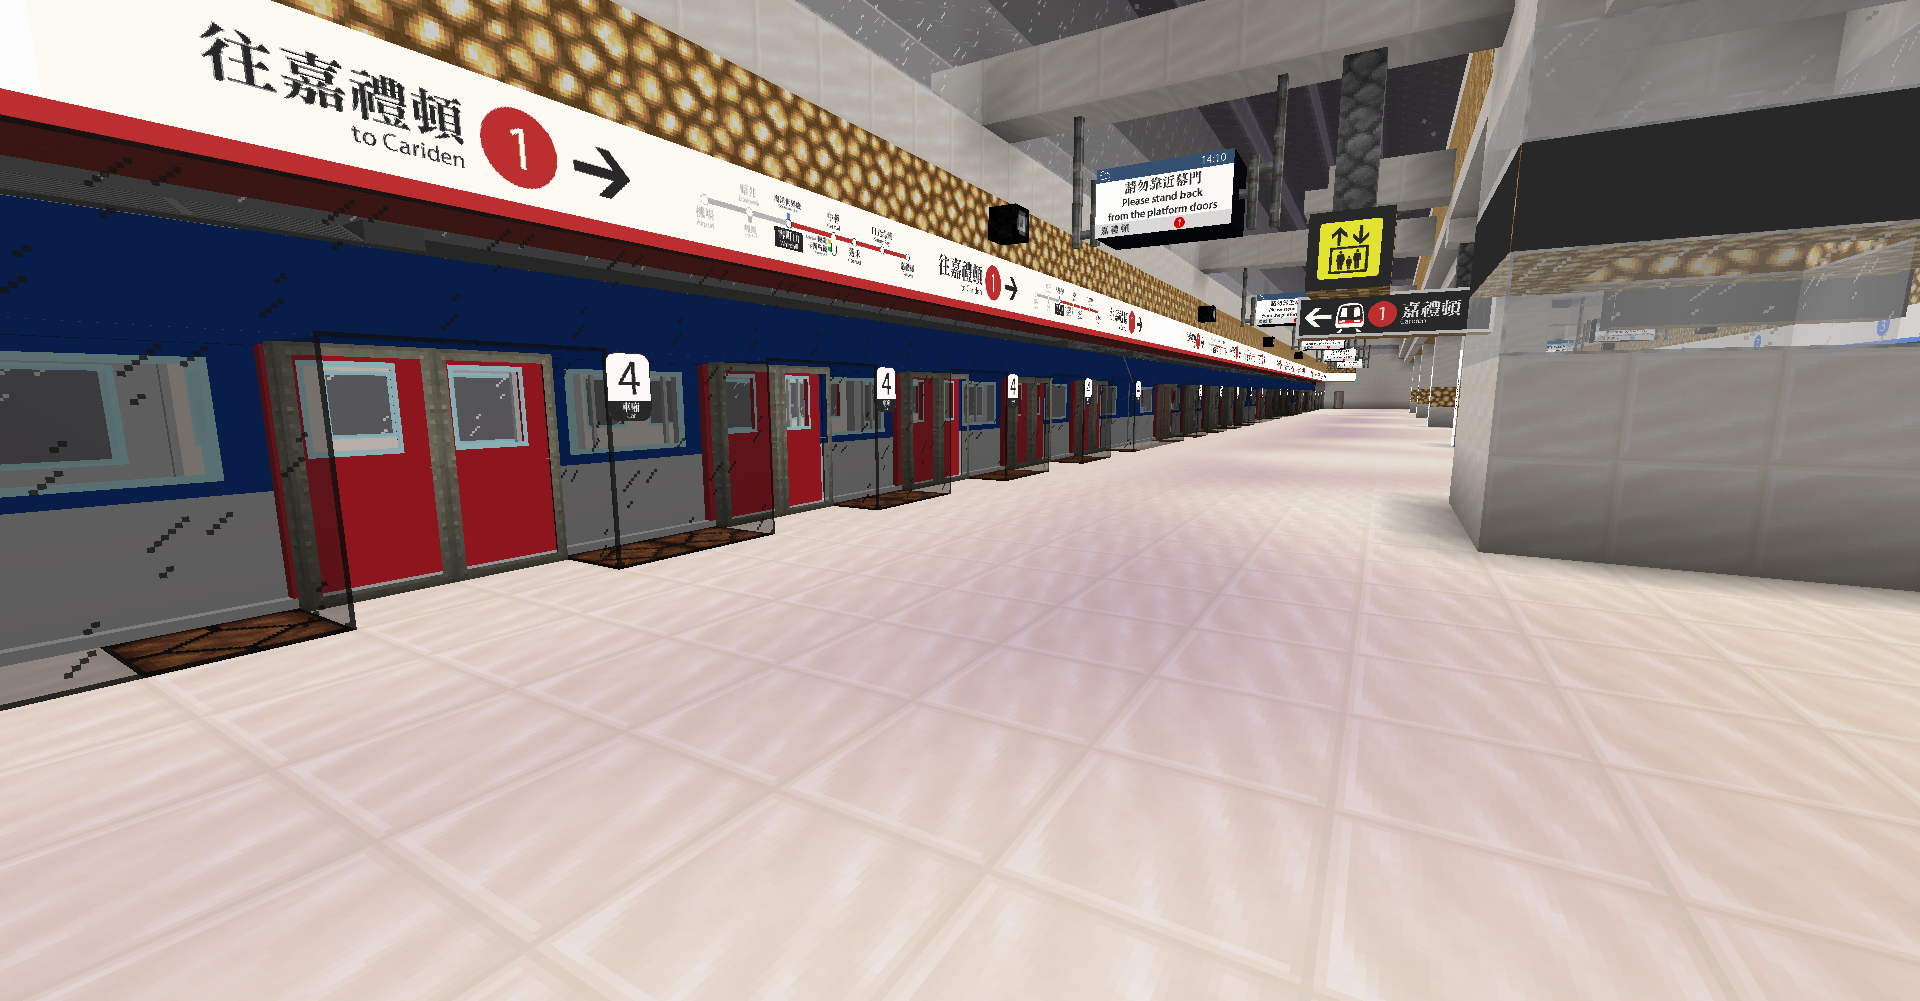 SCR Whitehill Station Platform 1